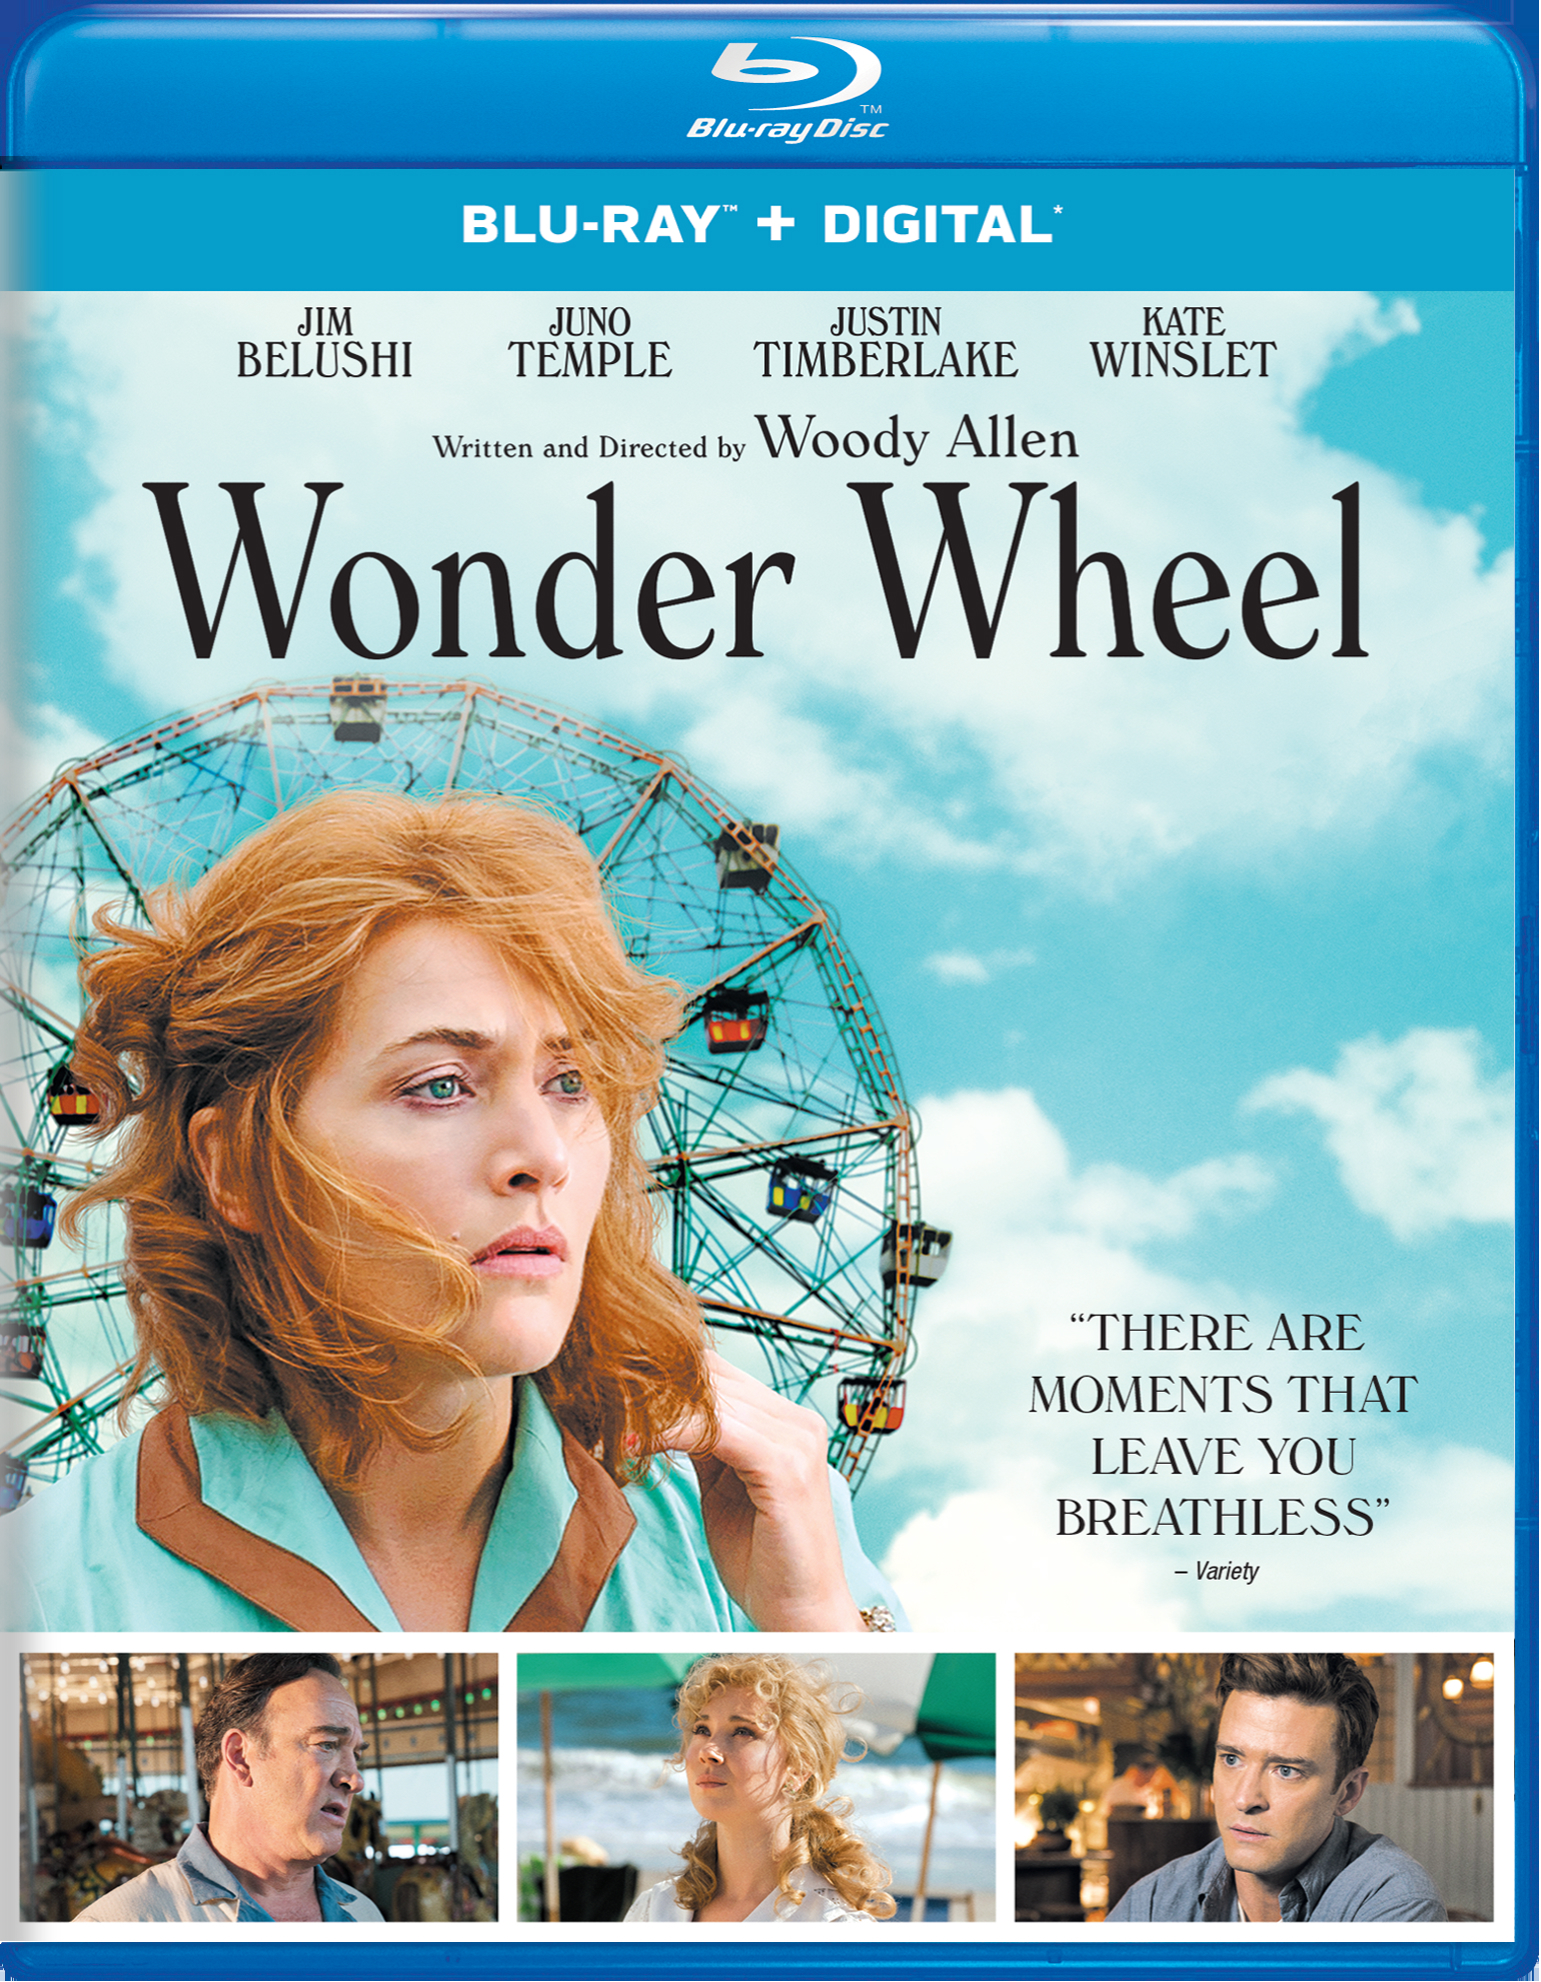 Wonder Wheel (Blu-ray + Digital HD) - Blu-ray [ 2017 ]  - Drama Movies On Blu-ray - Movies On GRUV